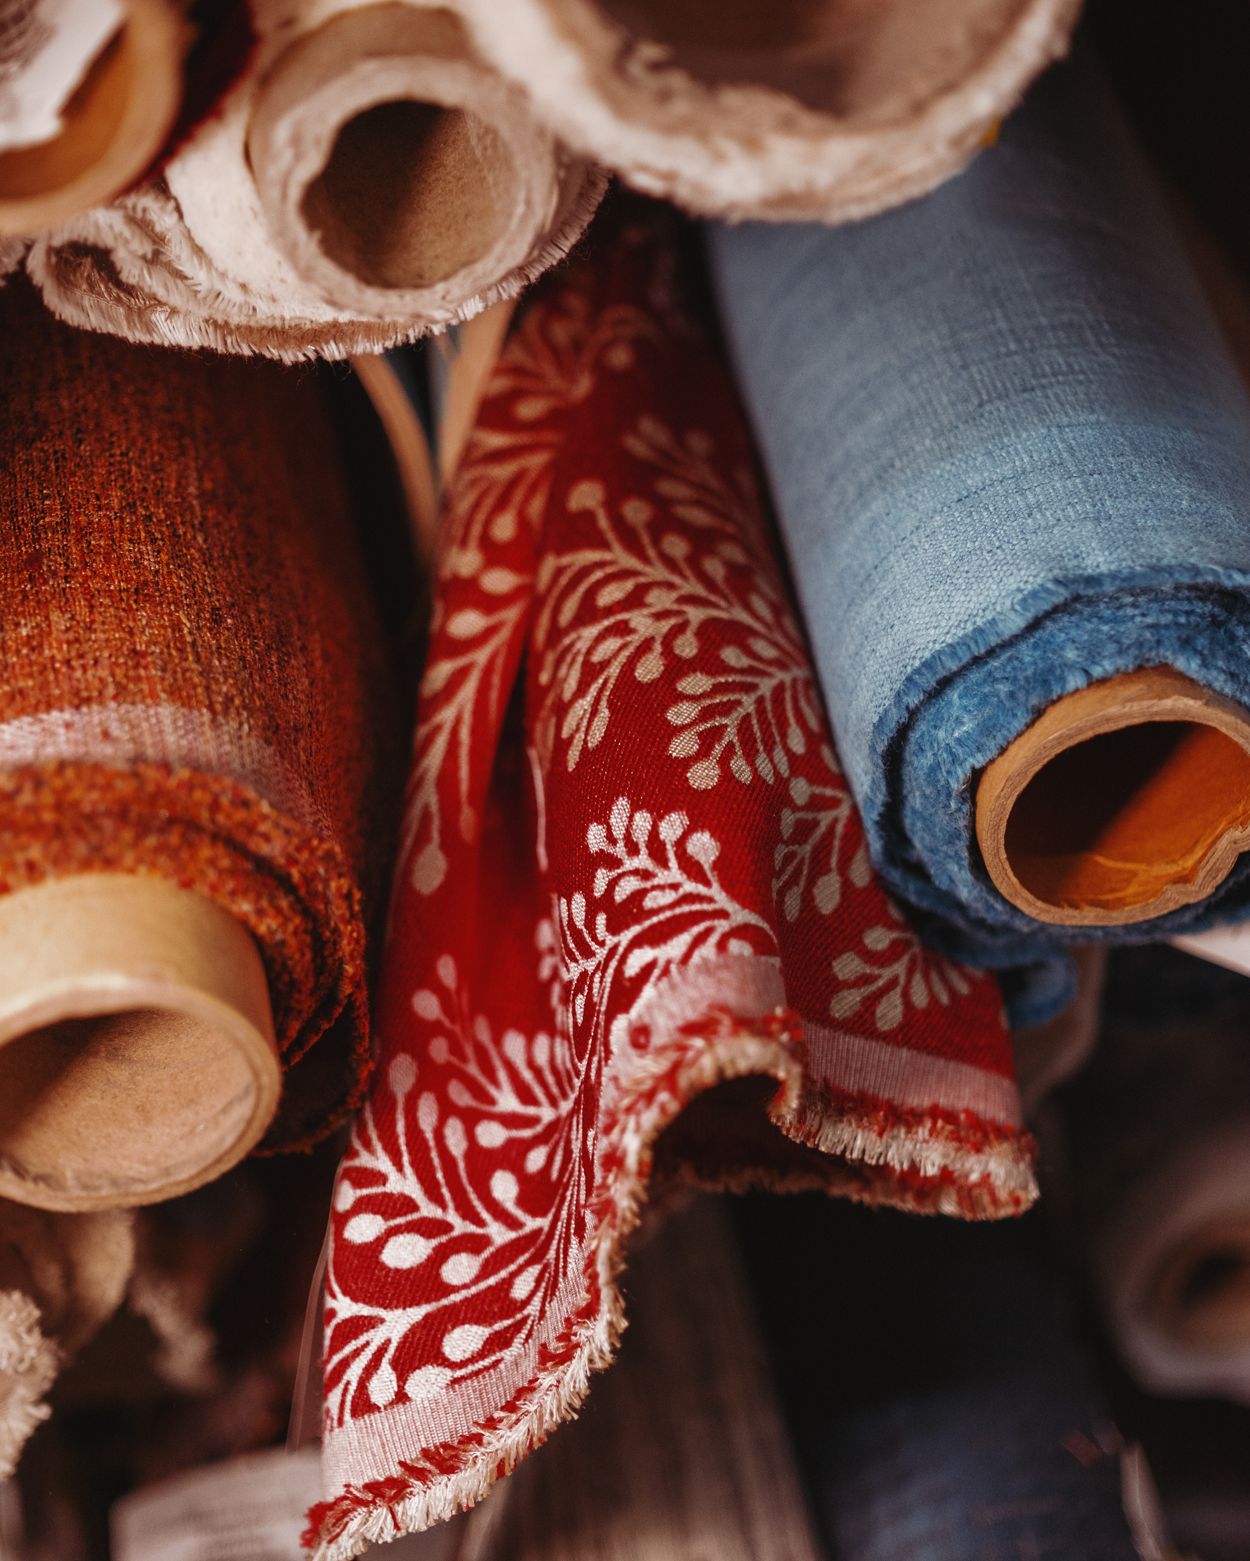 Herbert Parkinson - Image of rolls of fabric stacked